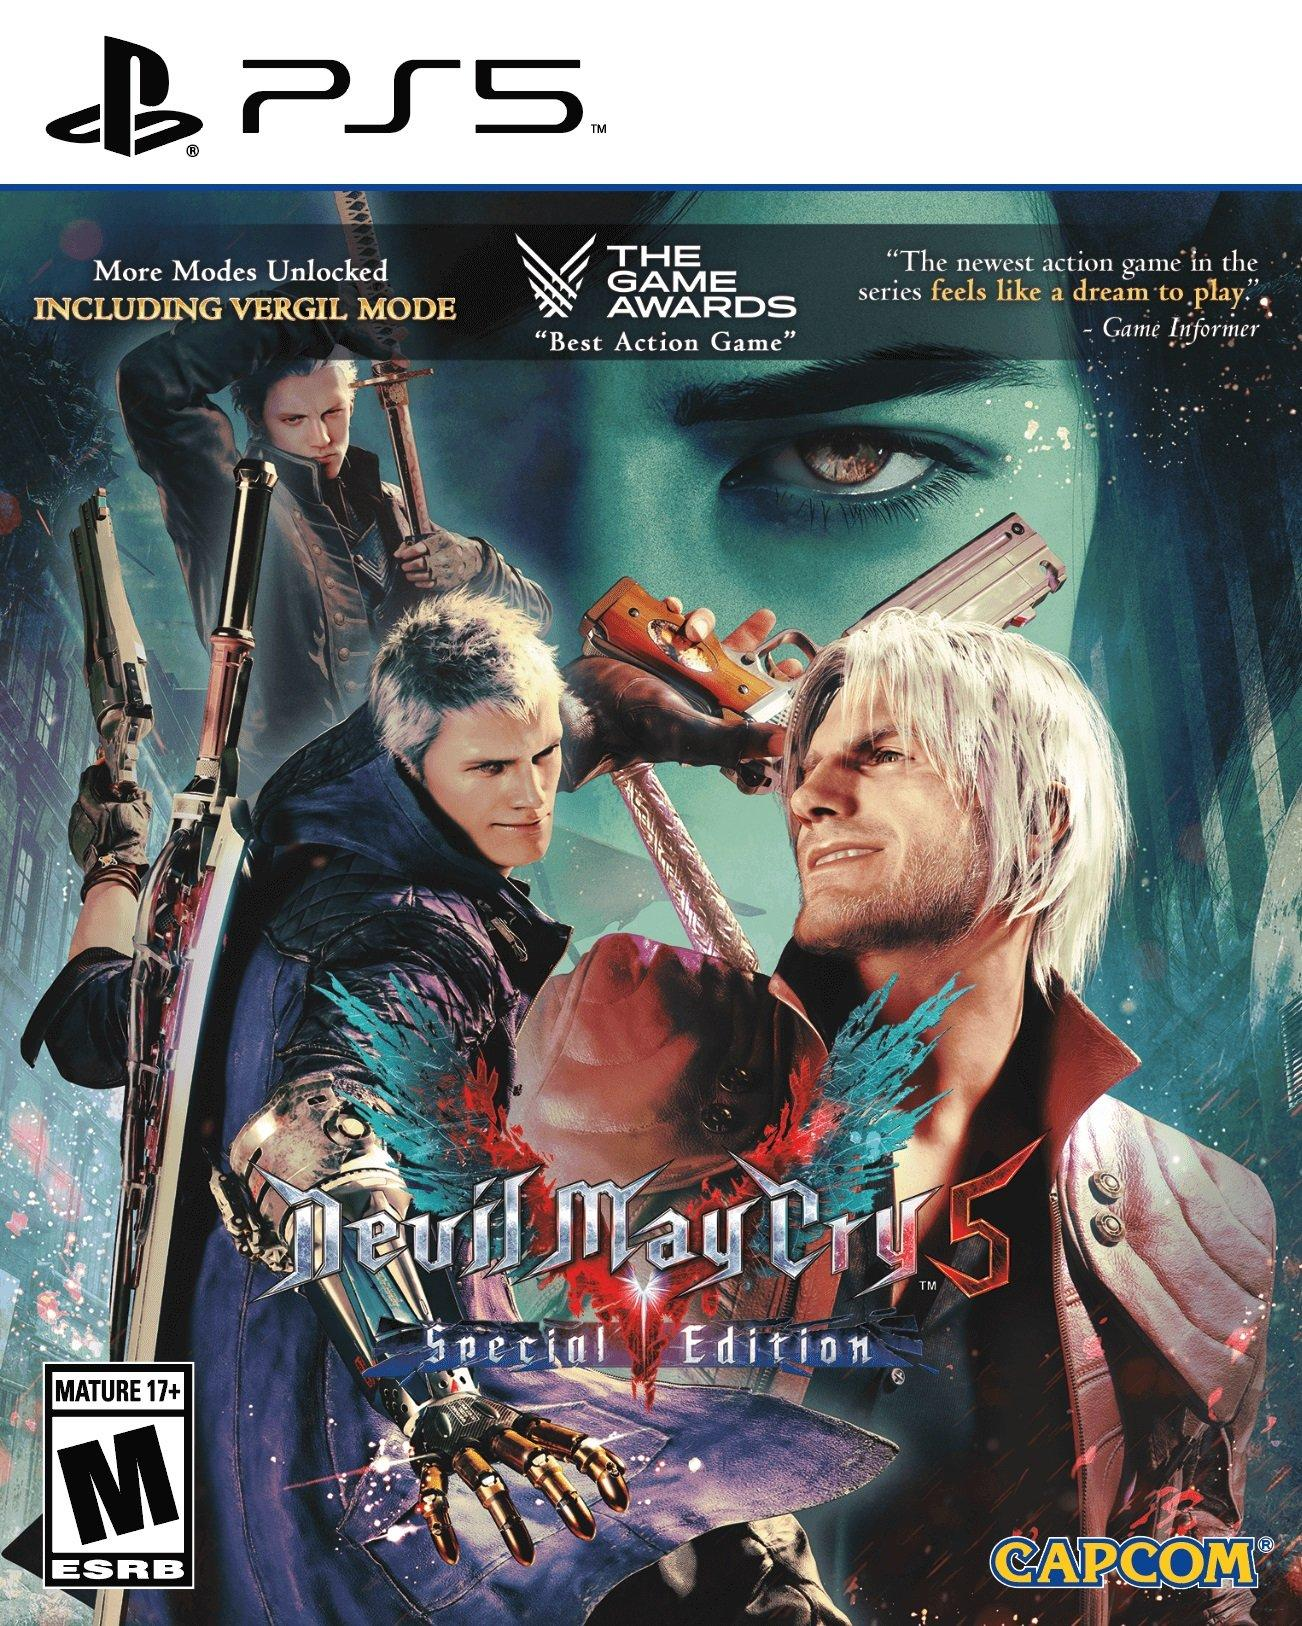 Devil May Cry 5 Special Edition - PlayStation 5 | PlayStation 5 | GameStop $14.99